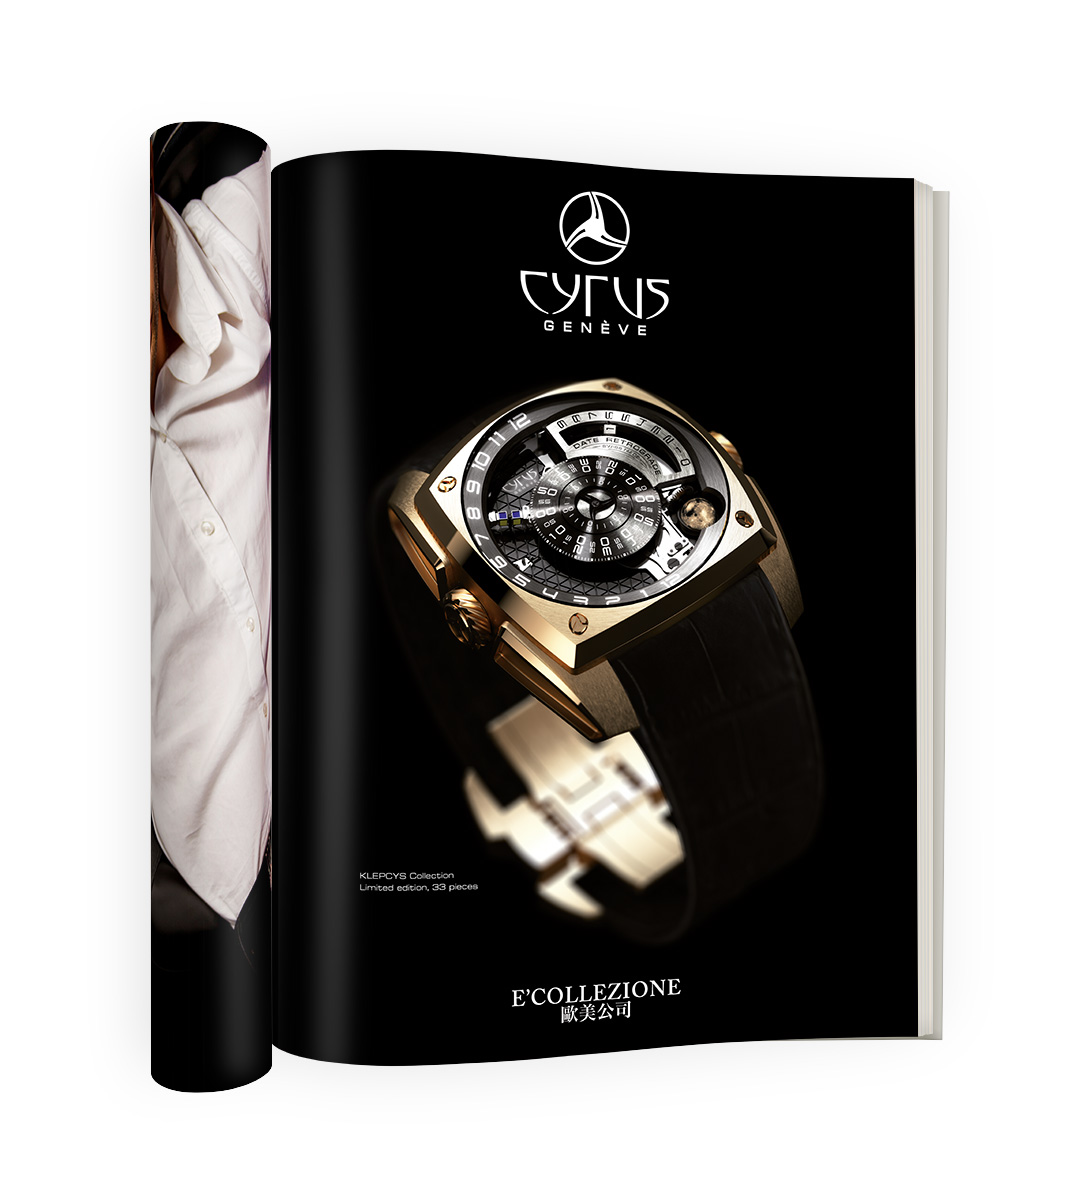 Signature de Luxe - Pub - Cyrus Watches